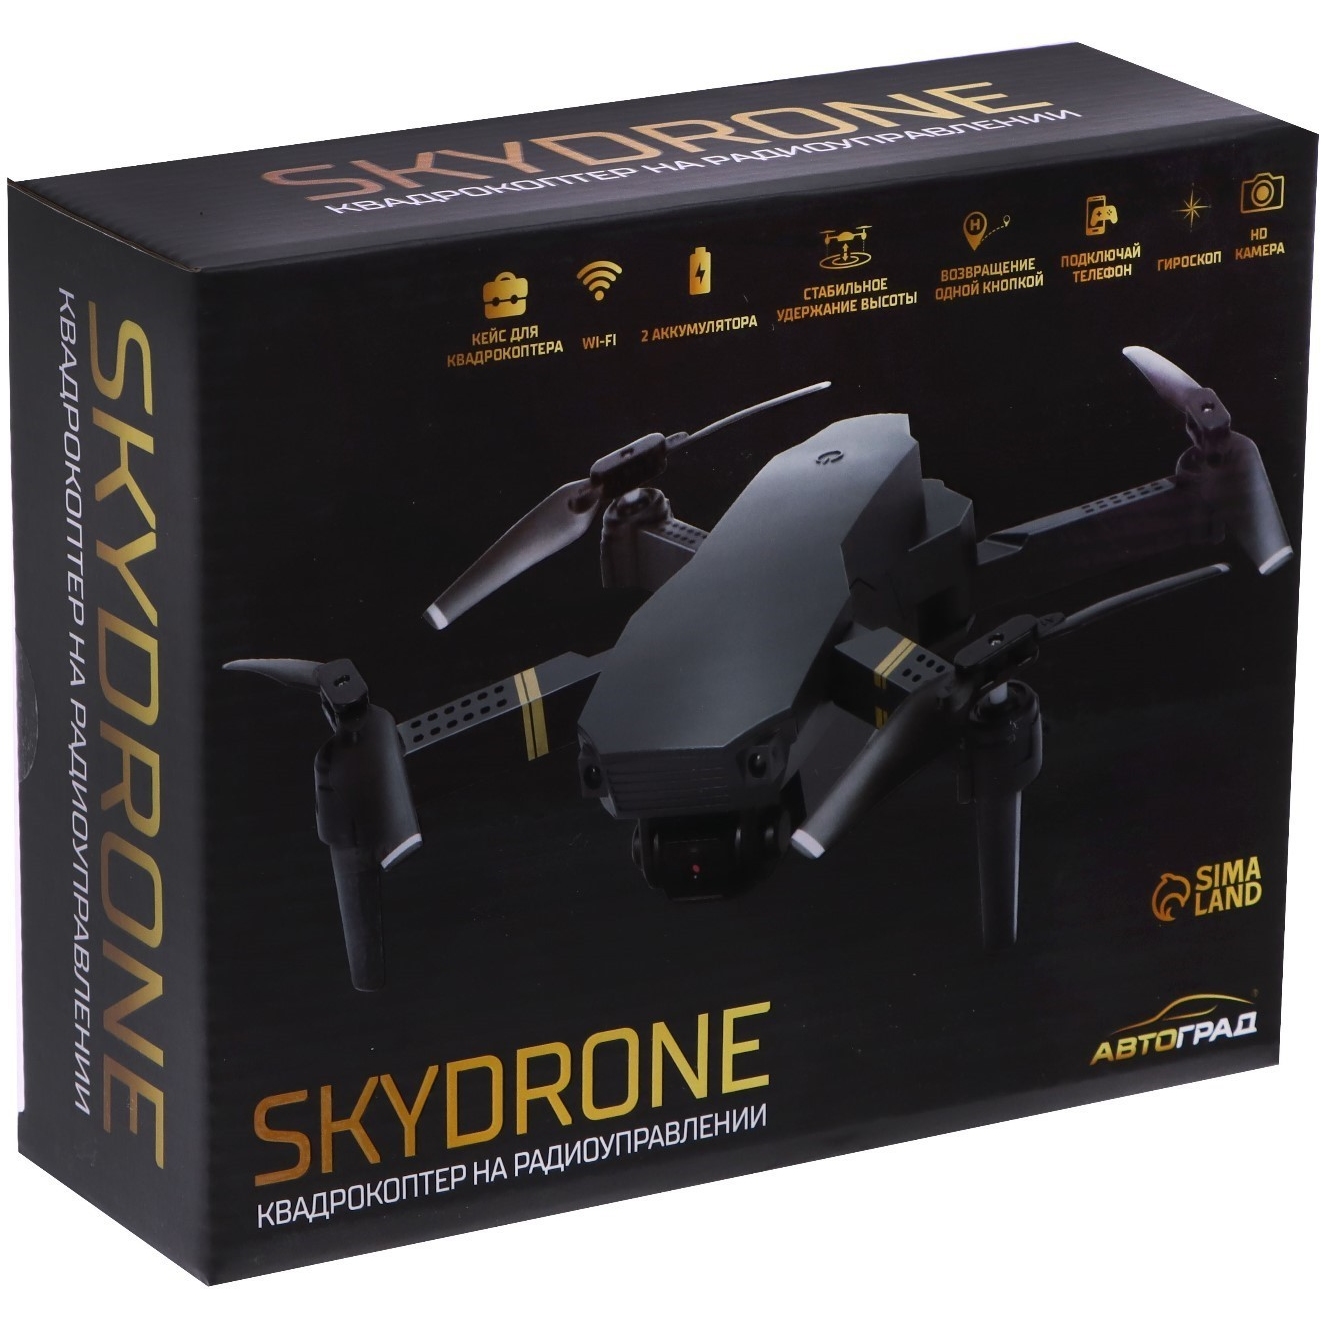 Квадрокоптер с пультом Skydrone (камера 1080P, барометр, Wi-Fi, черный) 714900